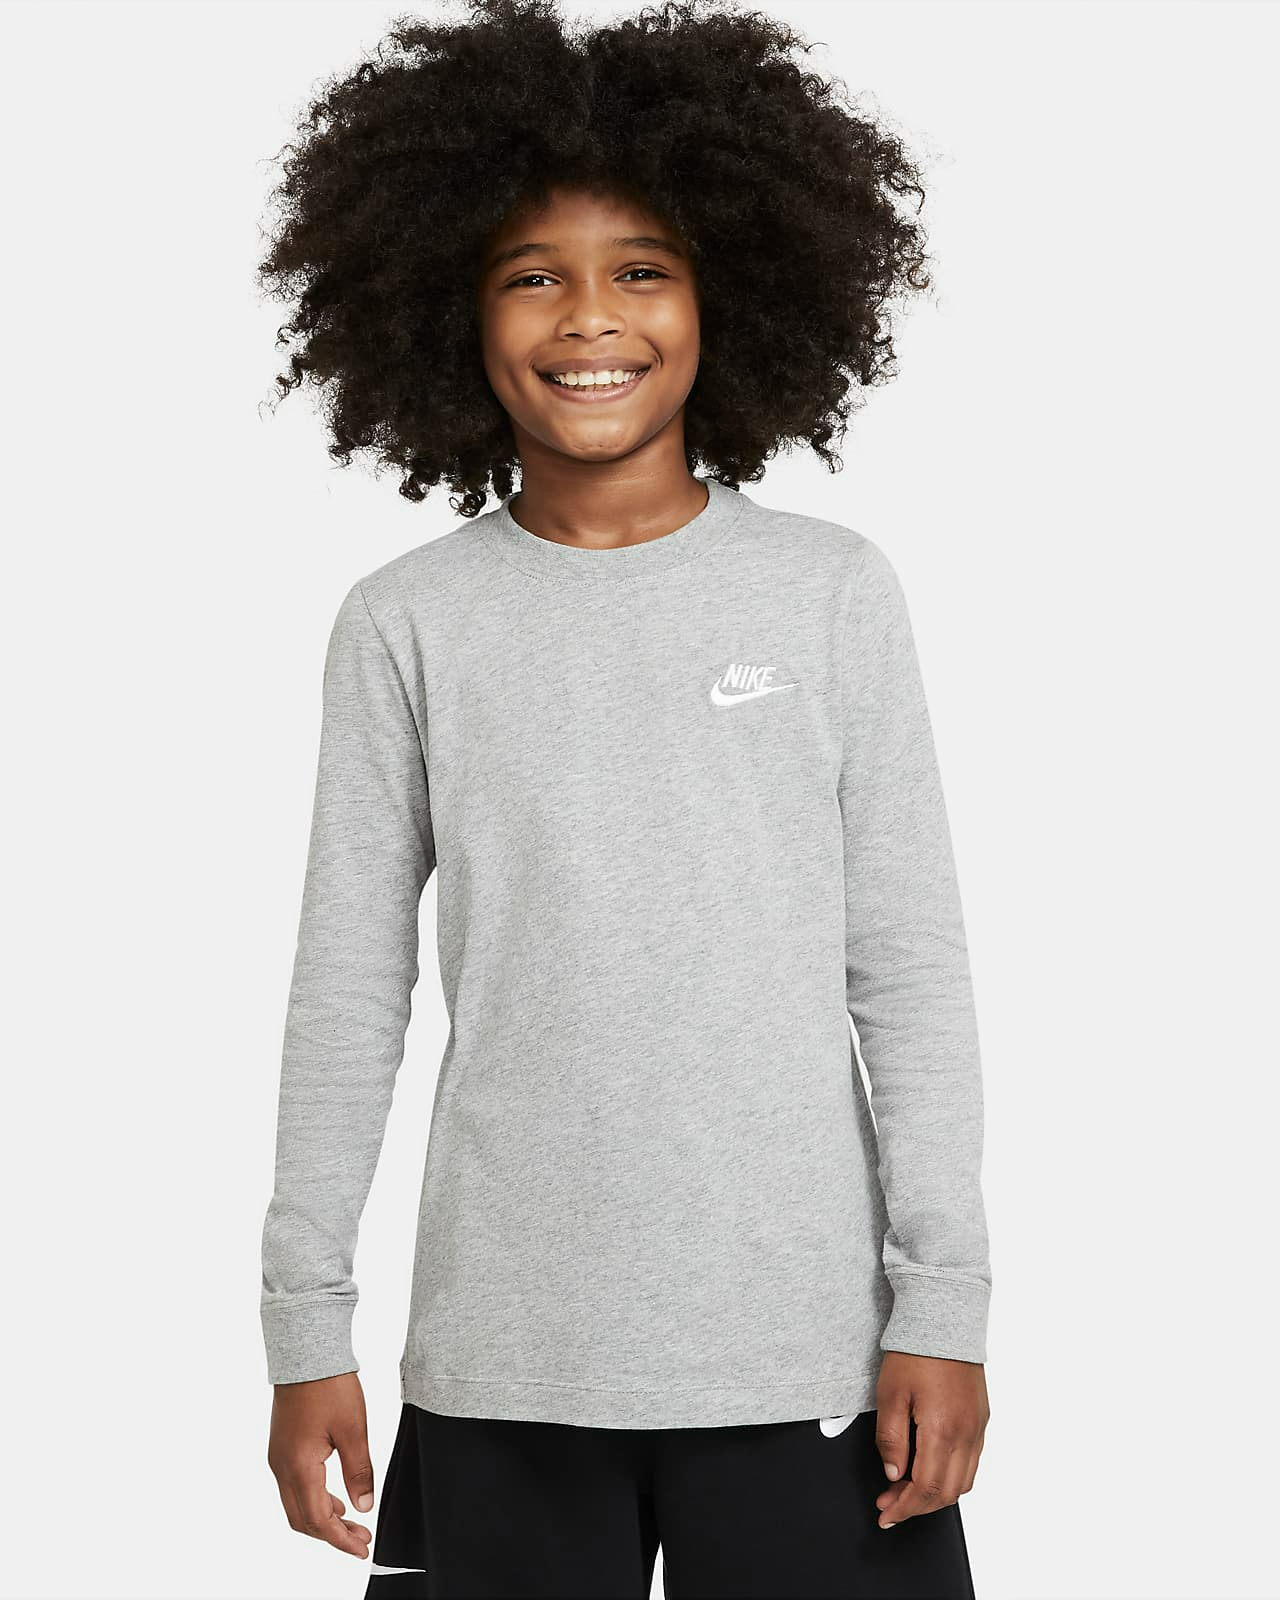 Nike Kids Sportswear Shirts Futura